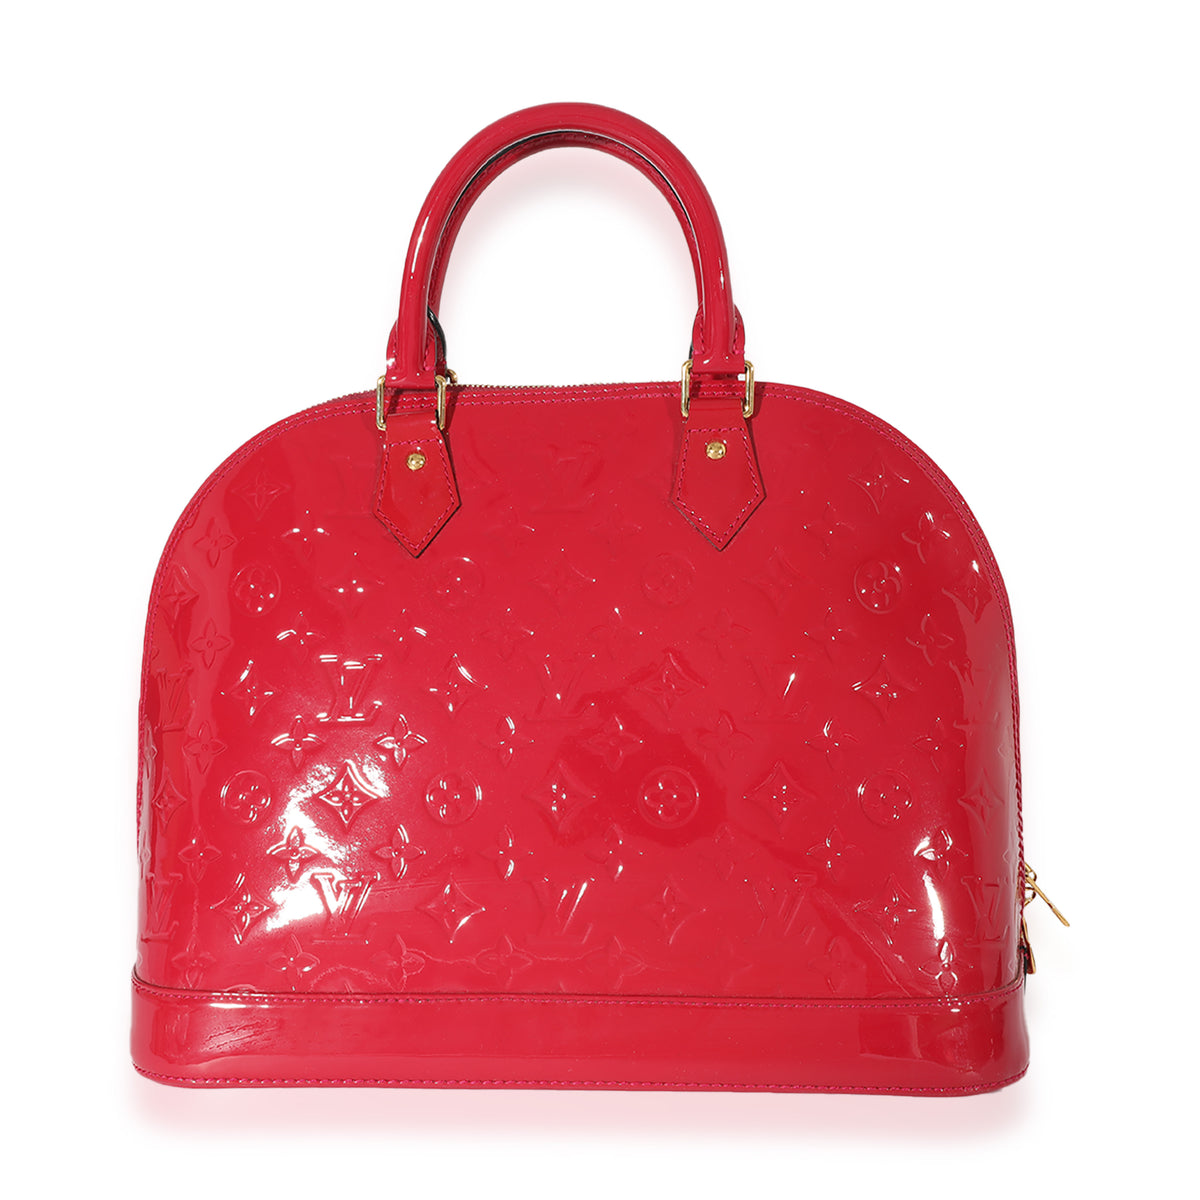 Louis Vuitton Monogram Vernis leather Alma MM handbag in red color